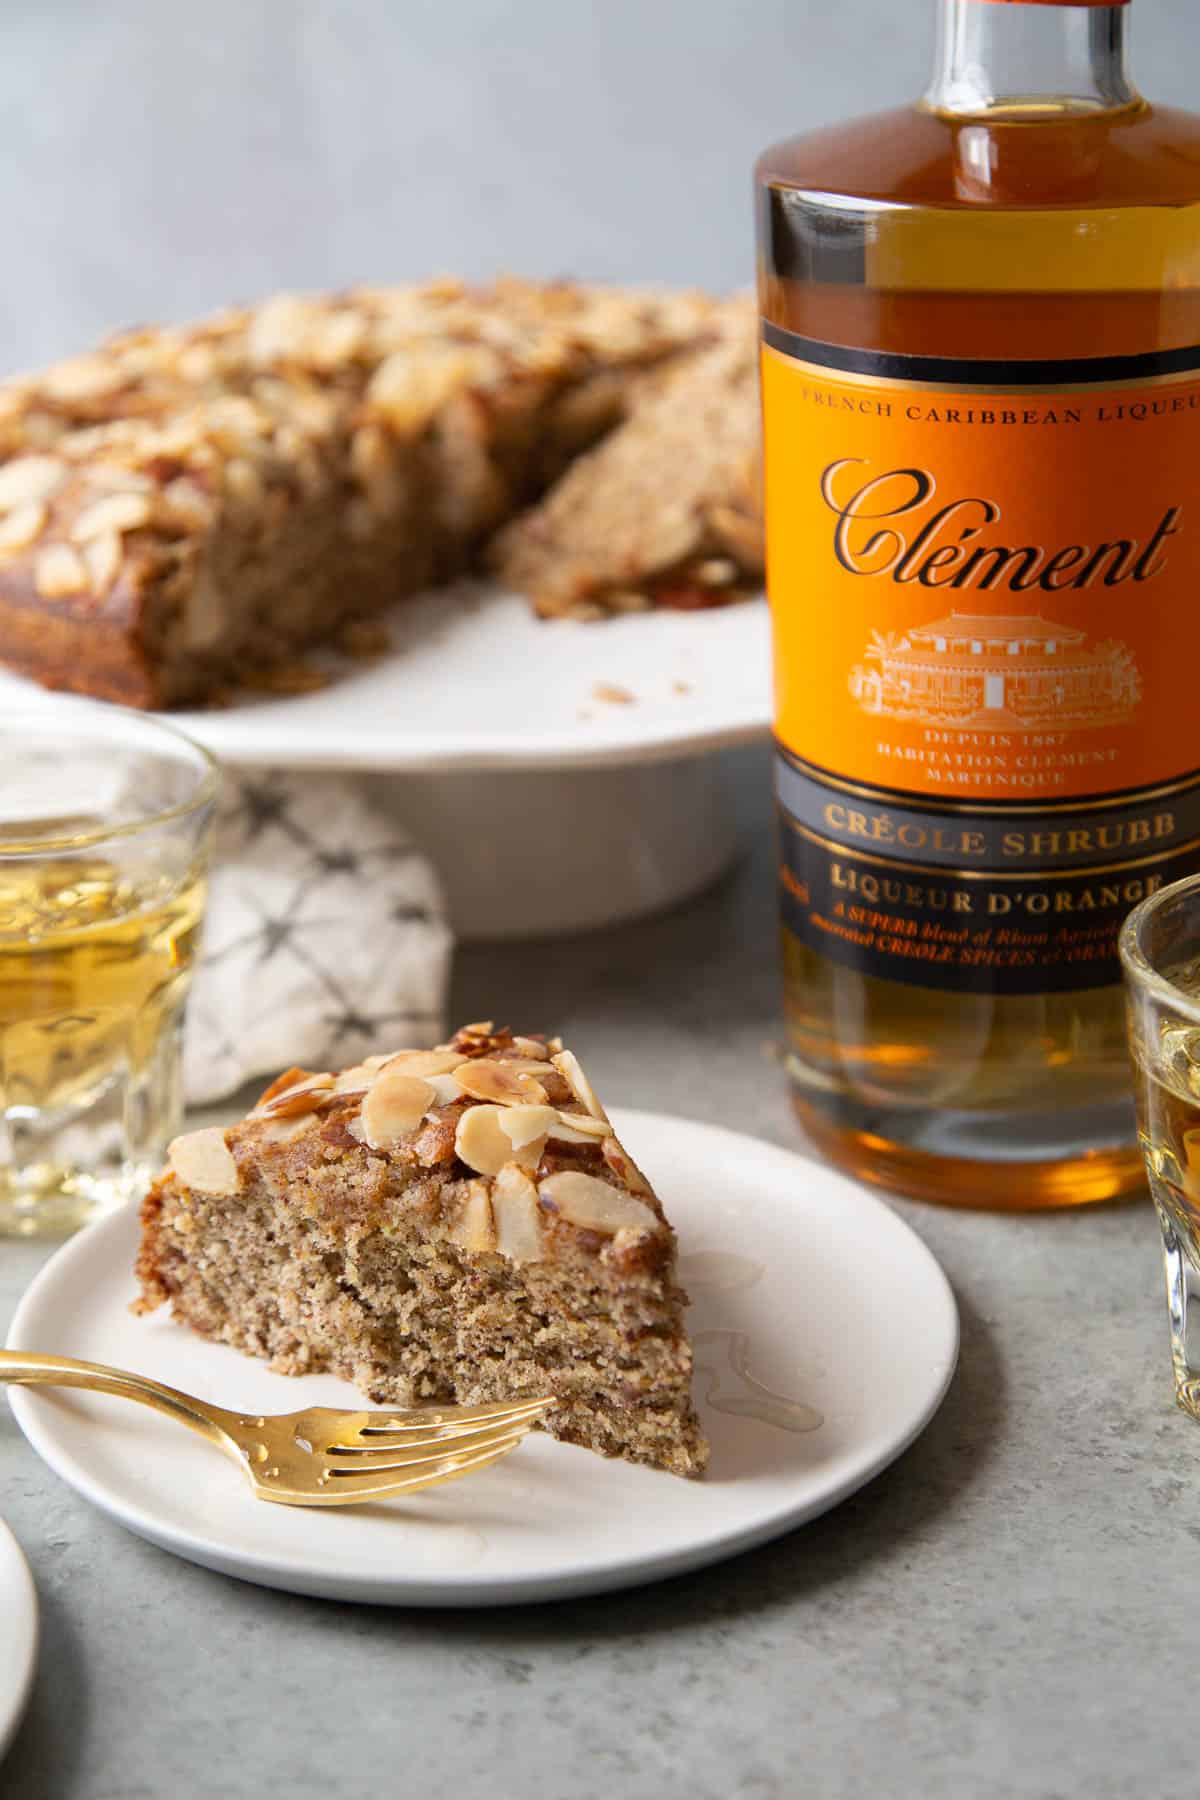 orange almond cake made with Clement creole shrubb orange liqueur